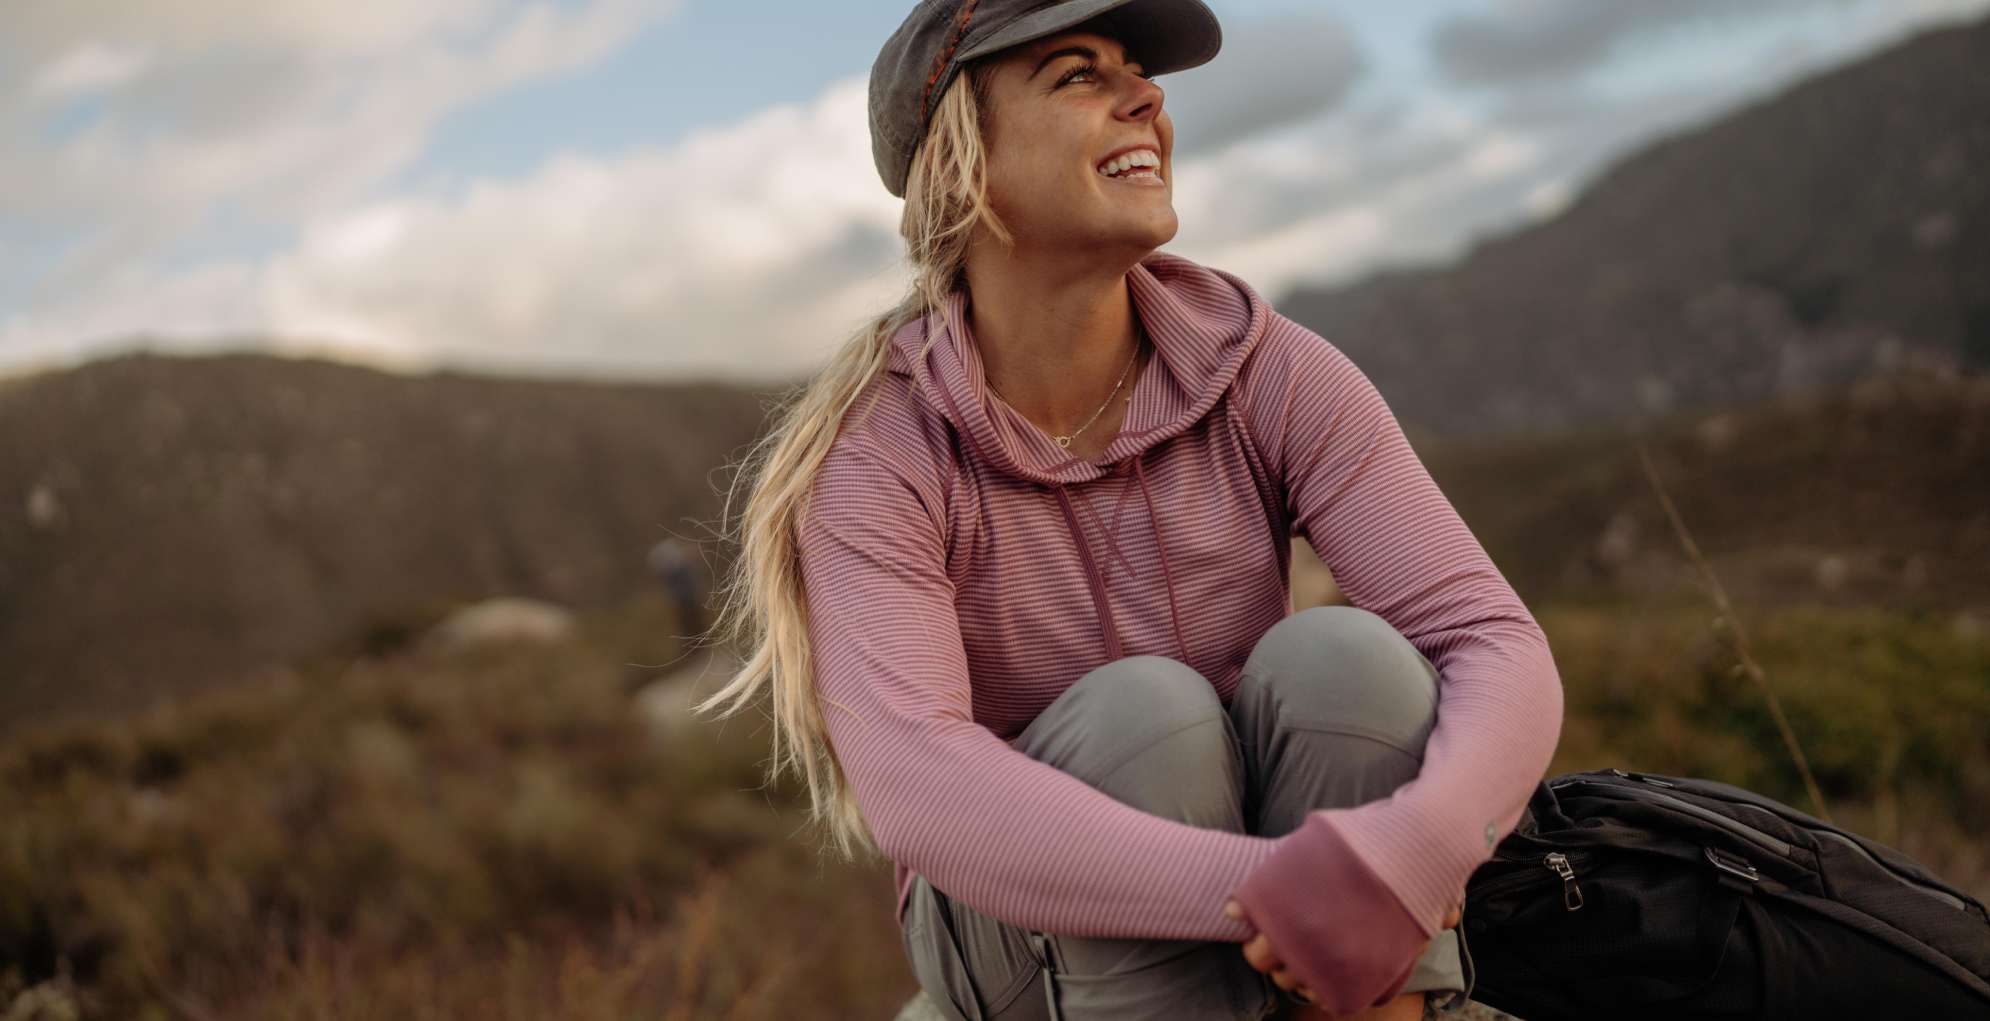 Women's Quick Dry Sun UV Protection Convertible Long Sleeve Safari Shirts  for Hiking Camping Fishing Sailing X-Large Khaki